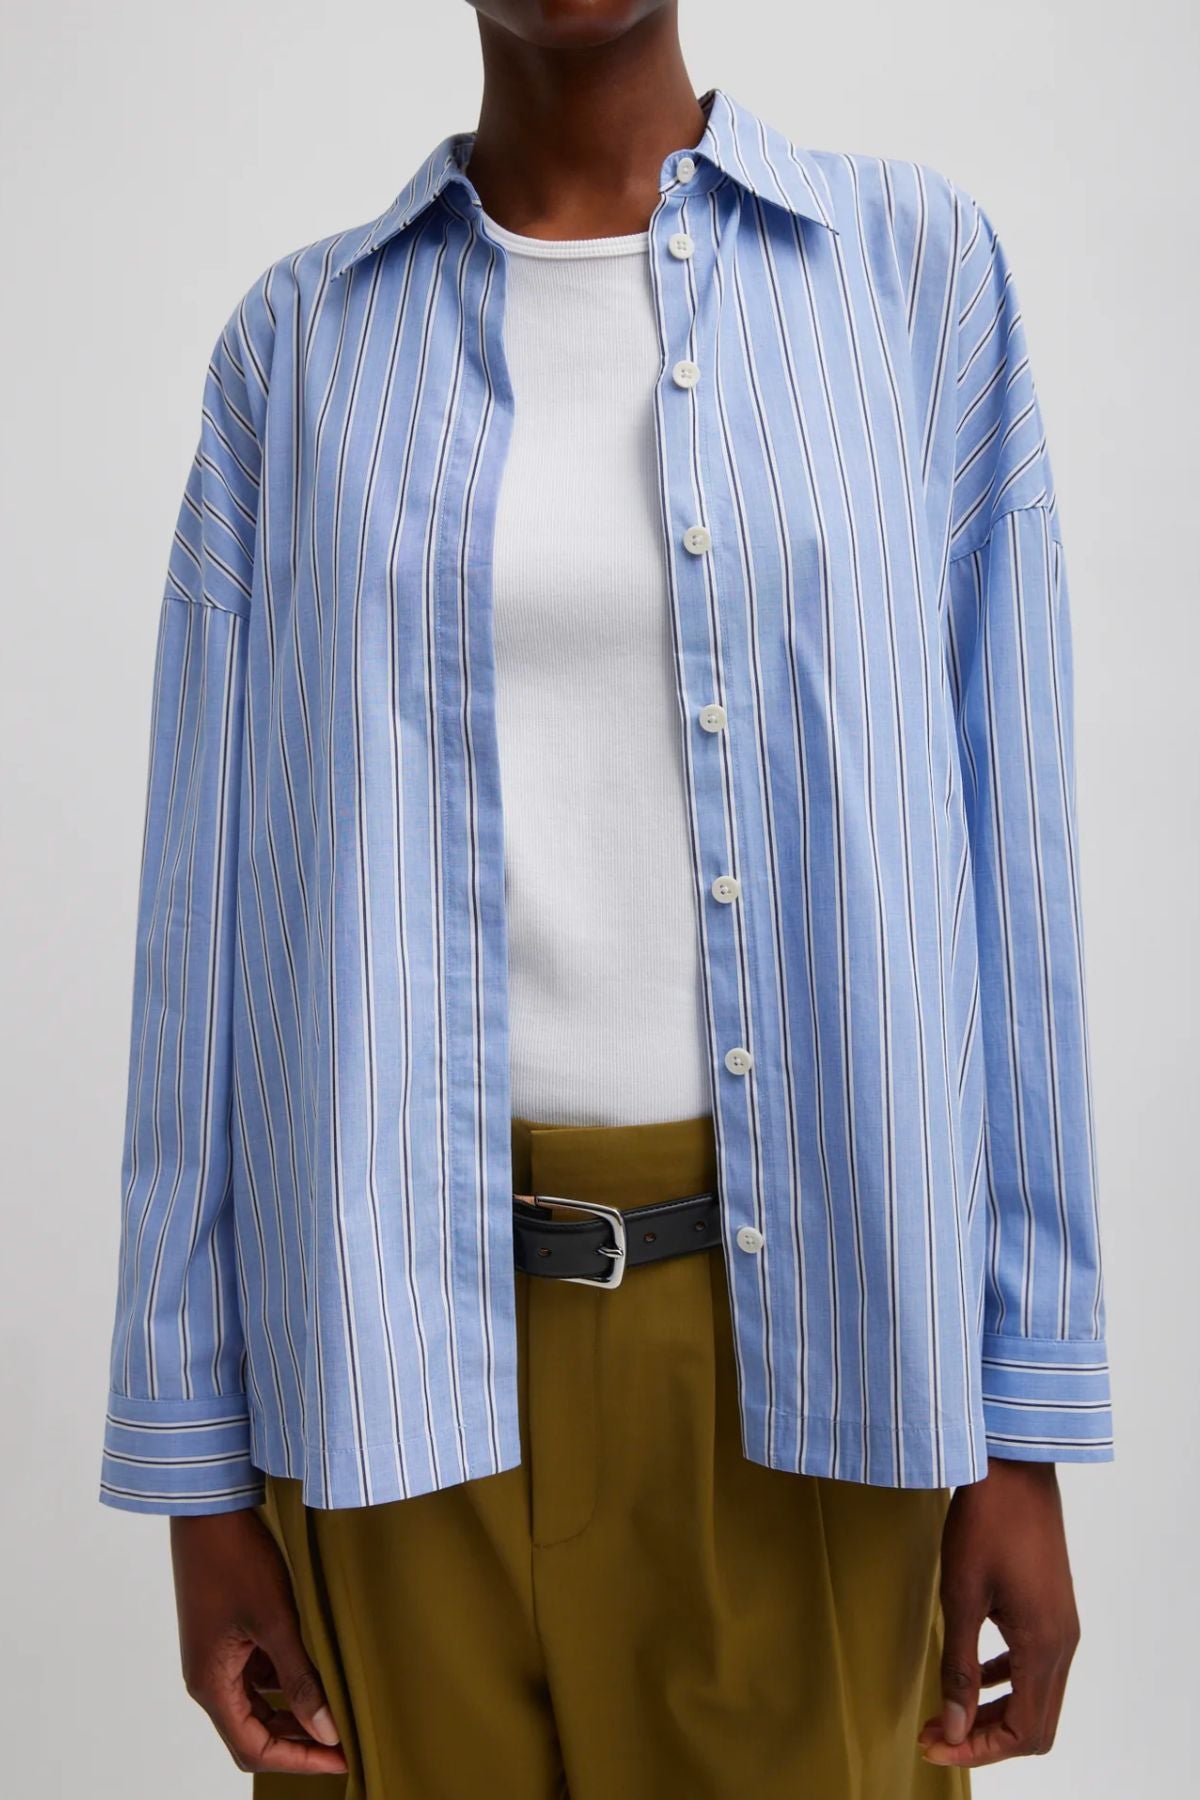 Tibi Gabe Oversized Striped Shirt - Blue Multi